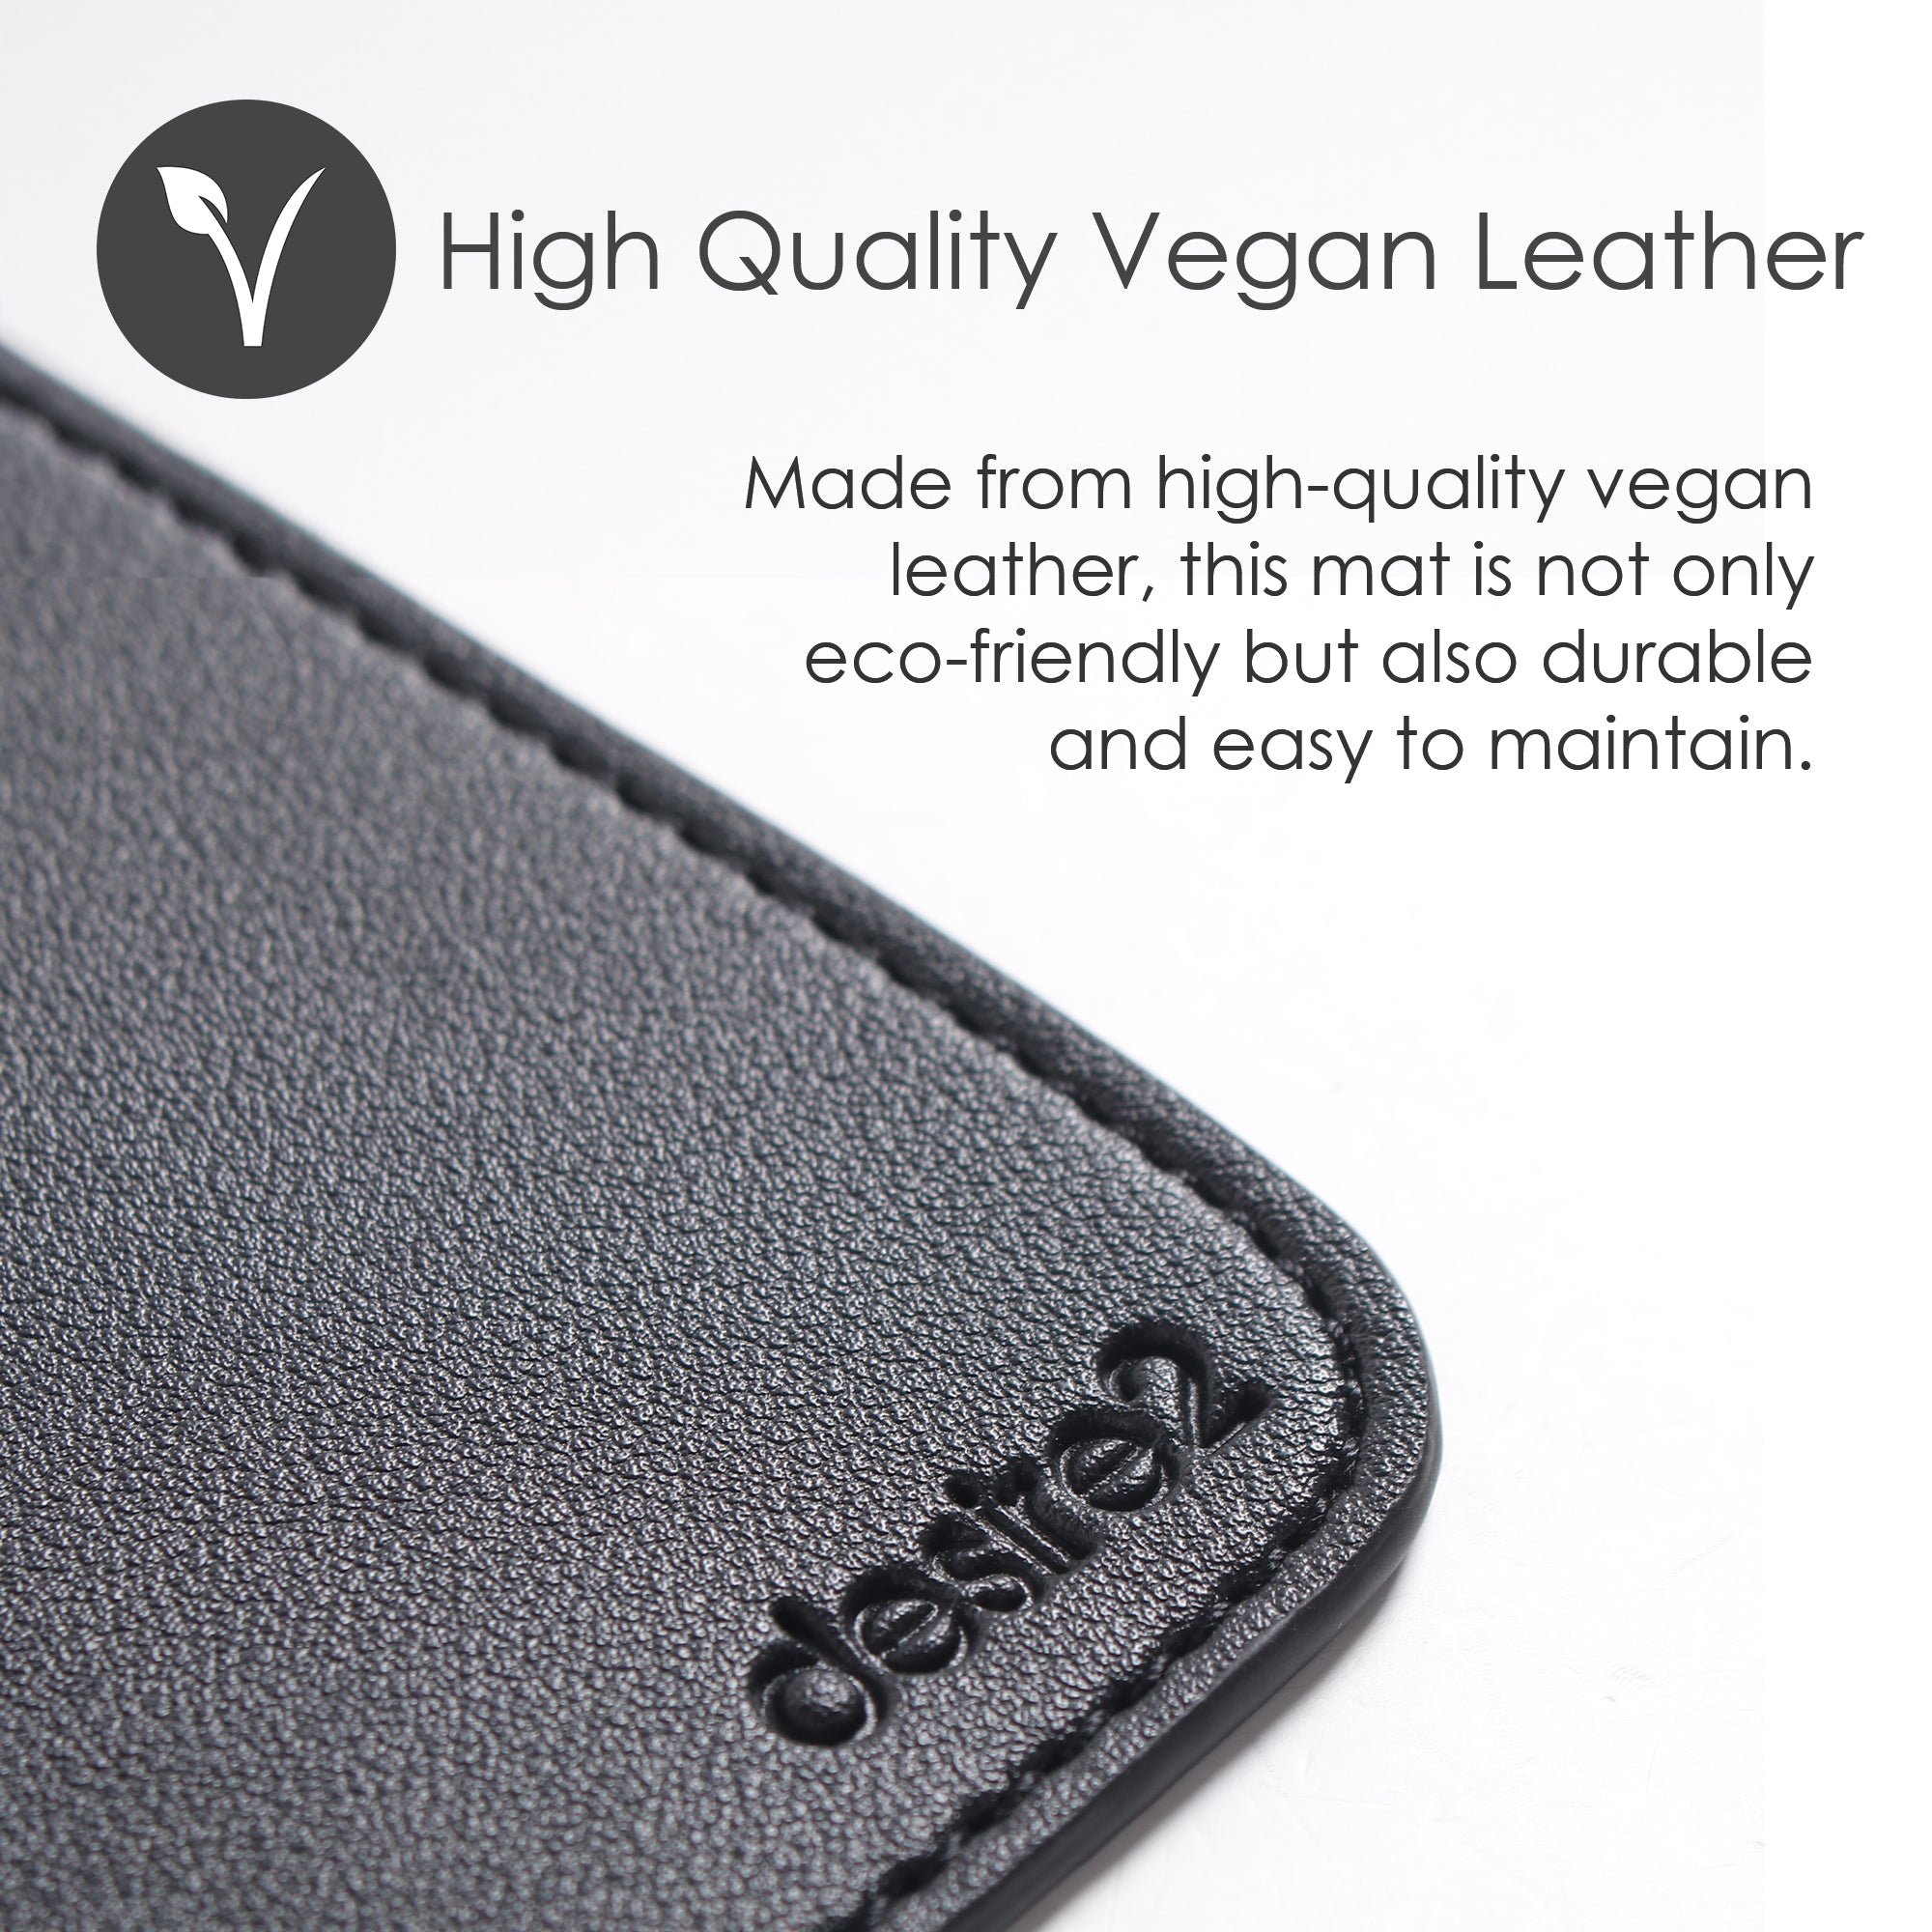 Charcoal Prestige Vegan Leather Desk Mat